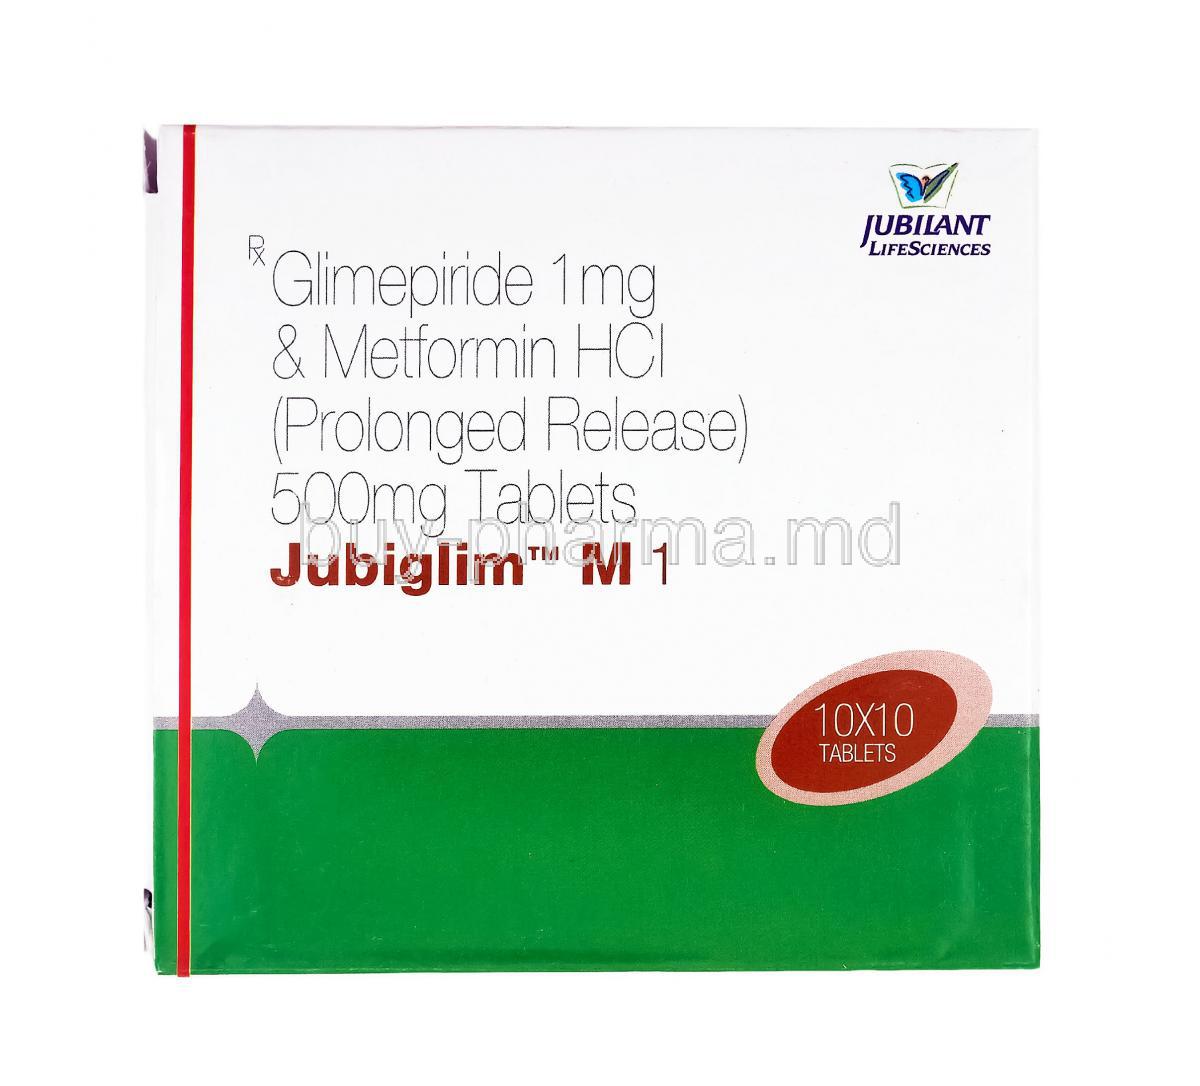 Jubiglim M, Glimepiride andMetformin